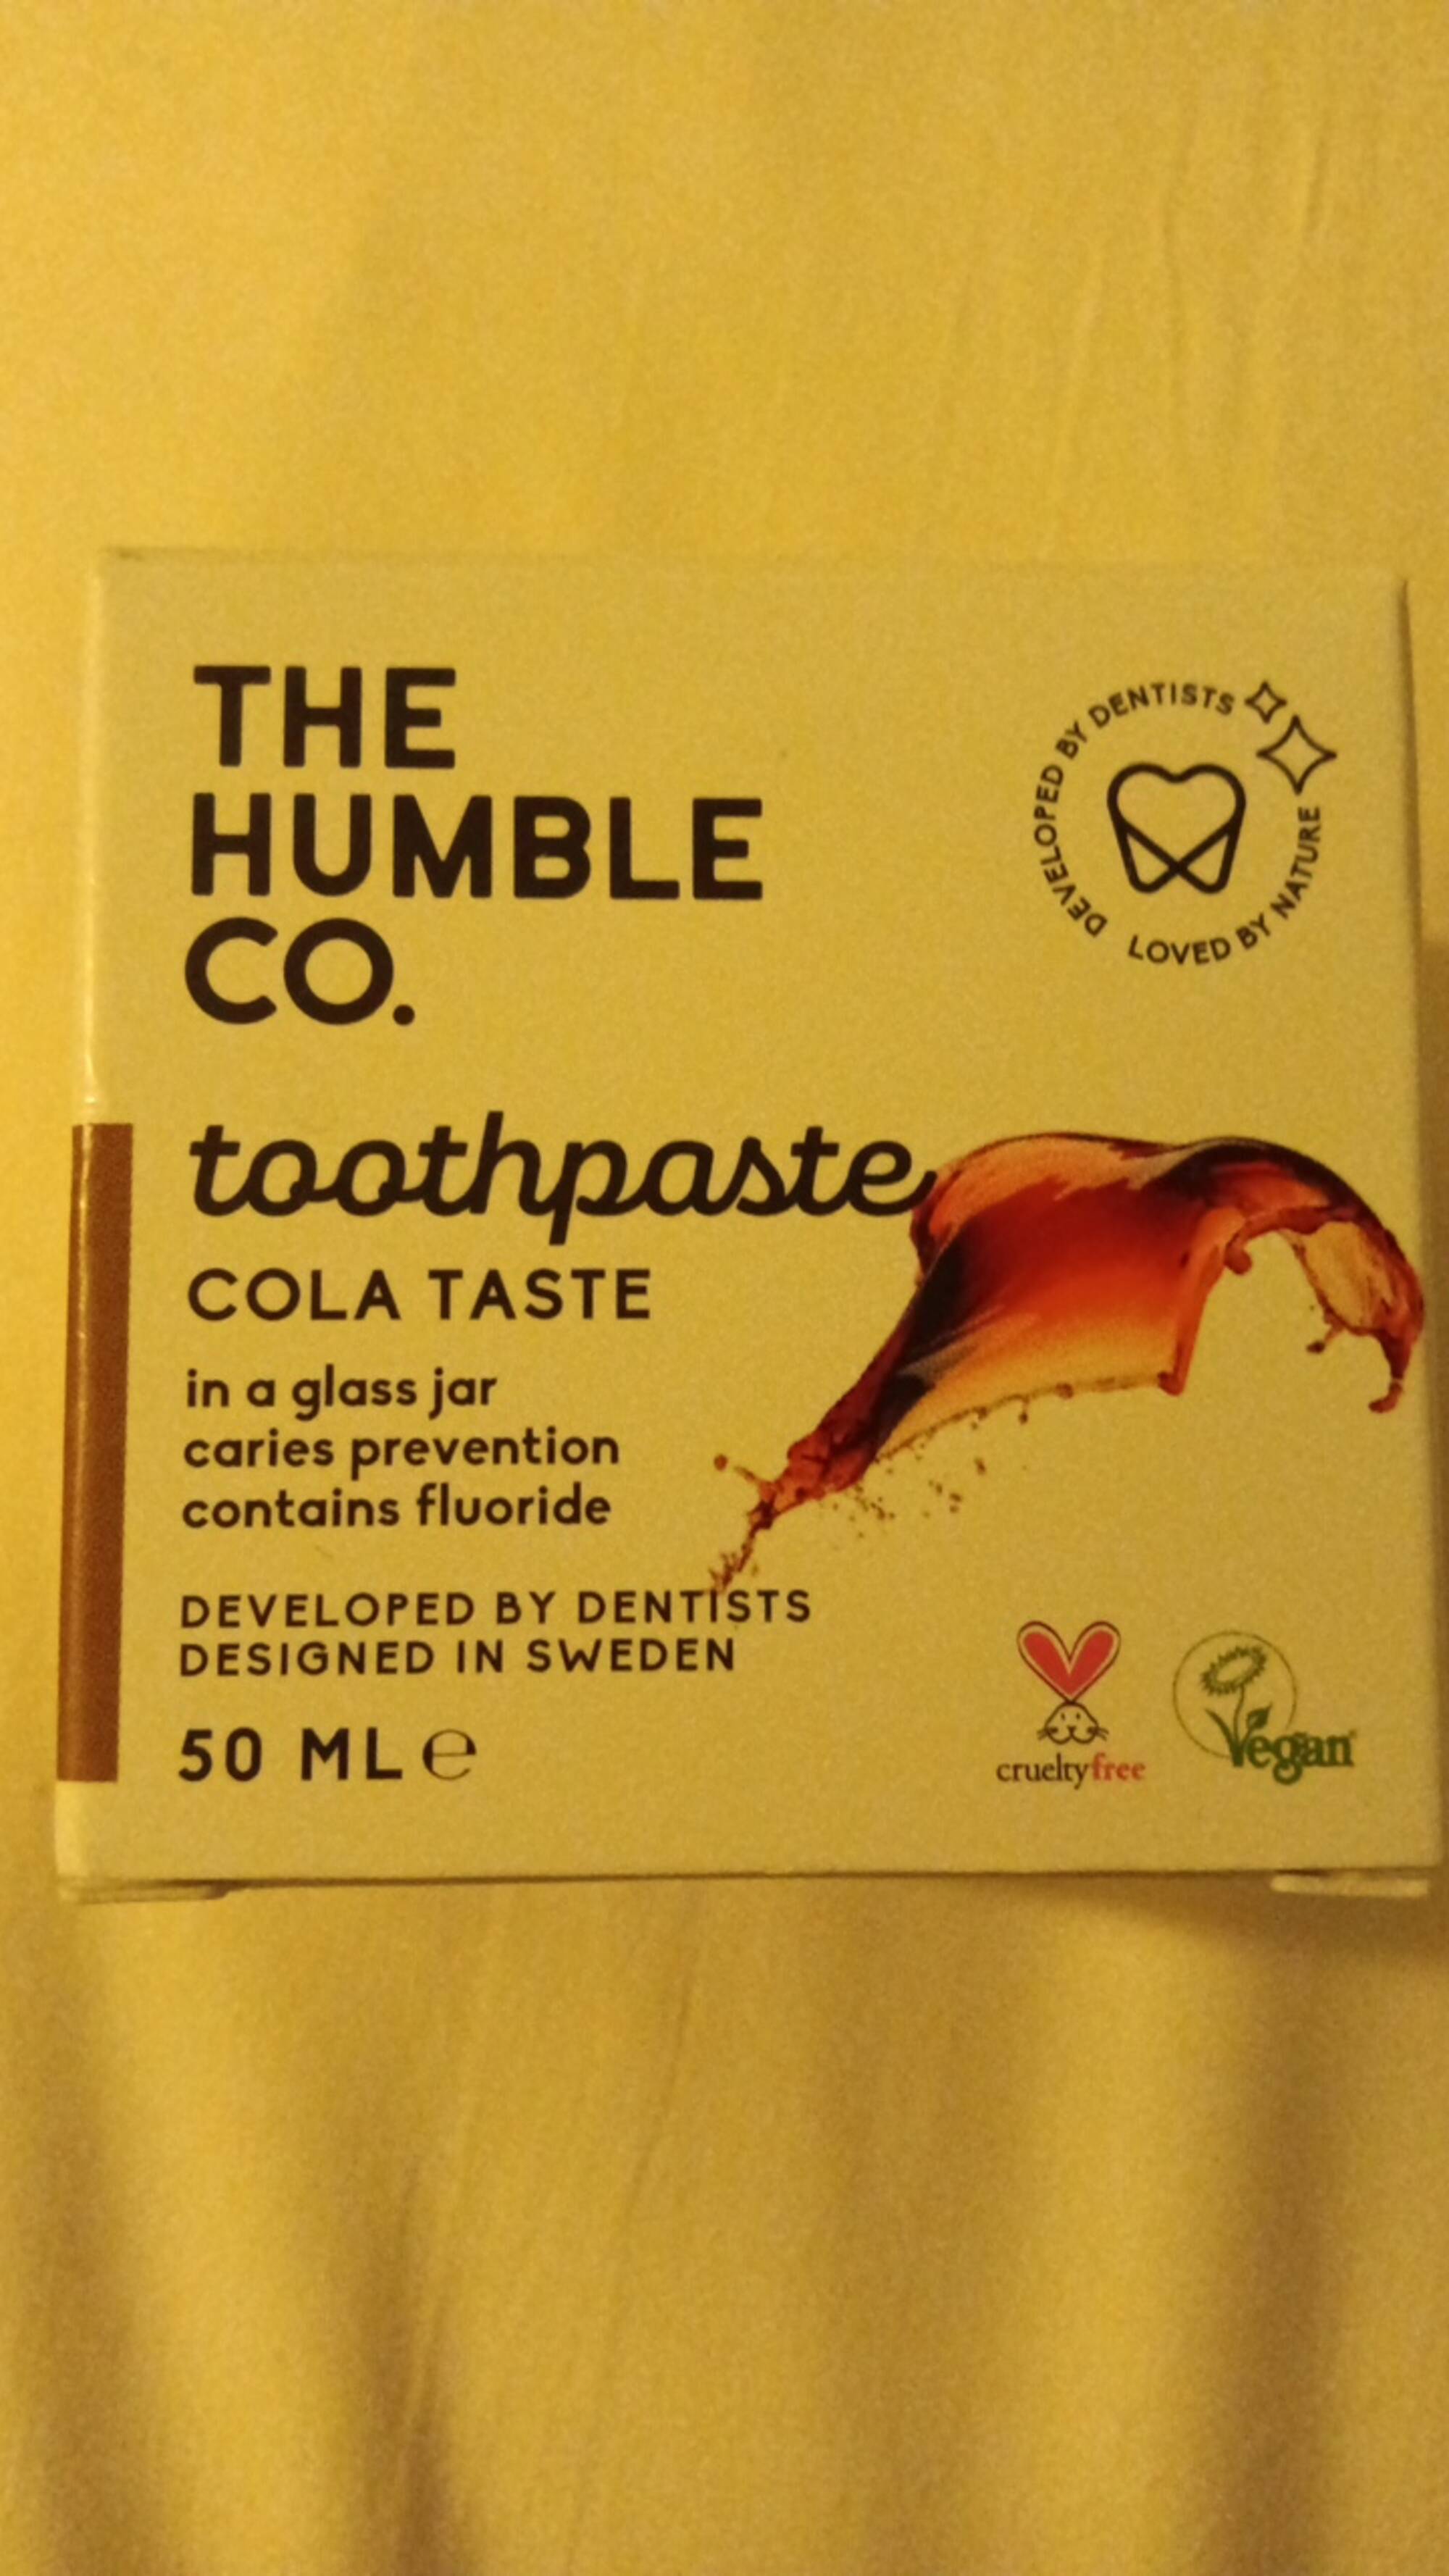 THE HUMBLE CO. - Toothpaste cola taste